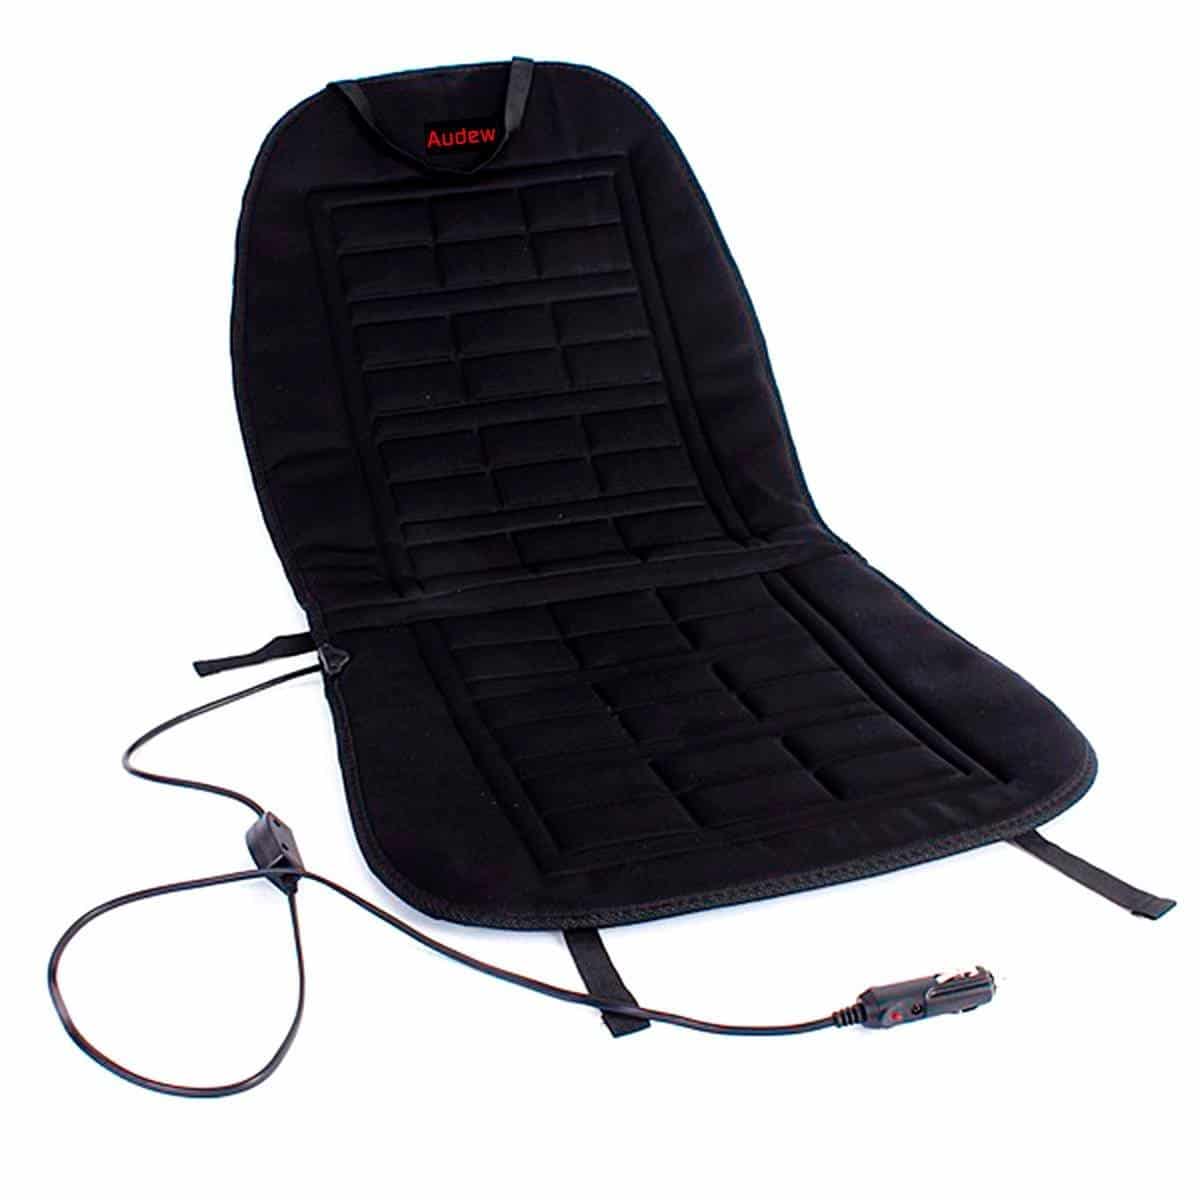 audew heated car seat cushion